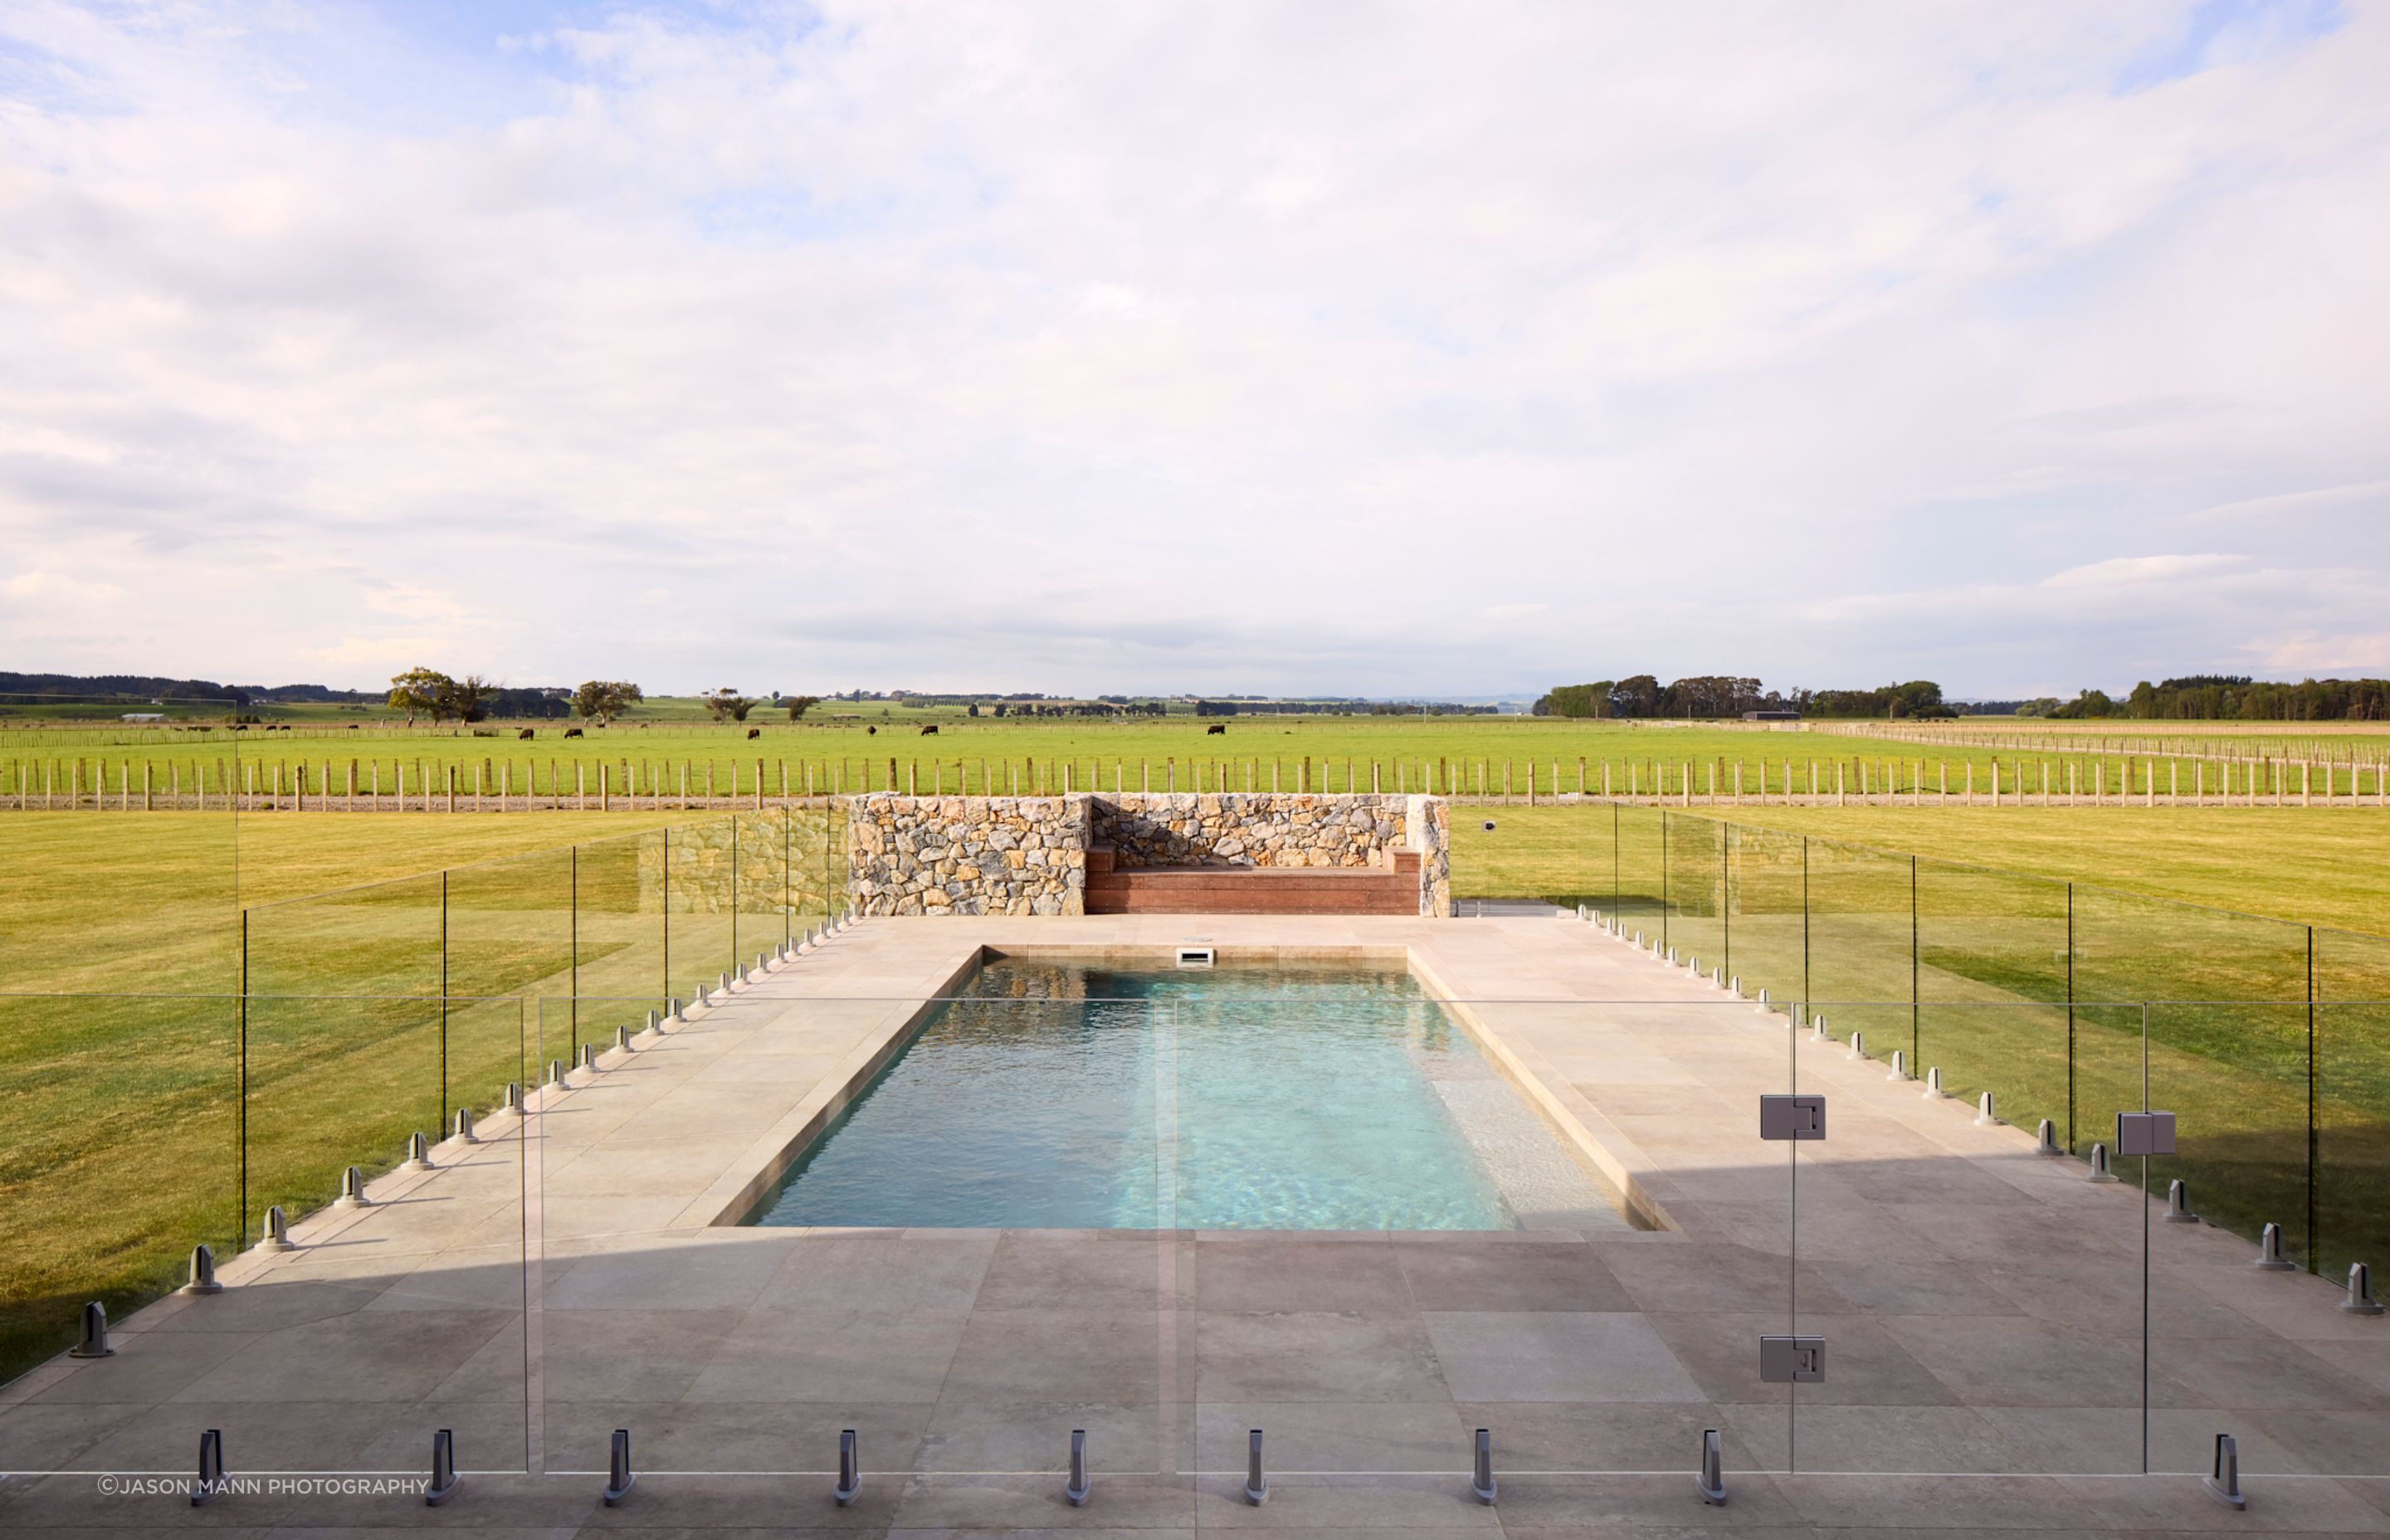 The idylic pool presents as a utopian retreat, with the farm paddocks beyond.